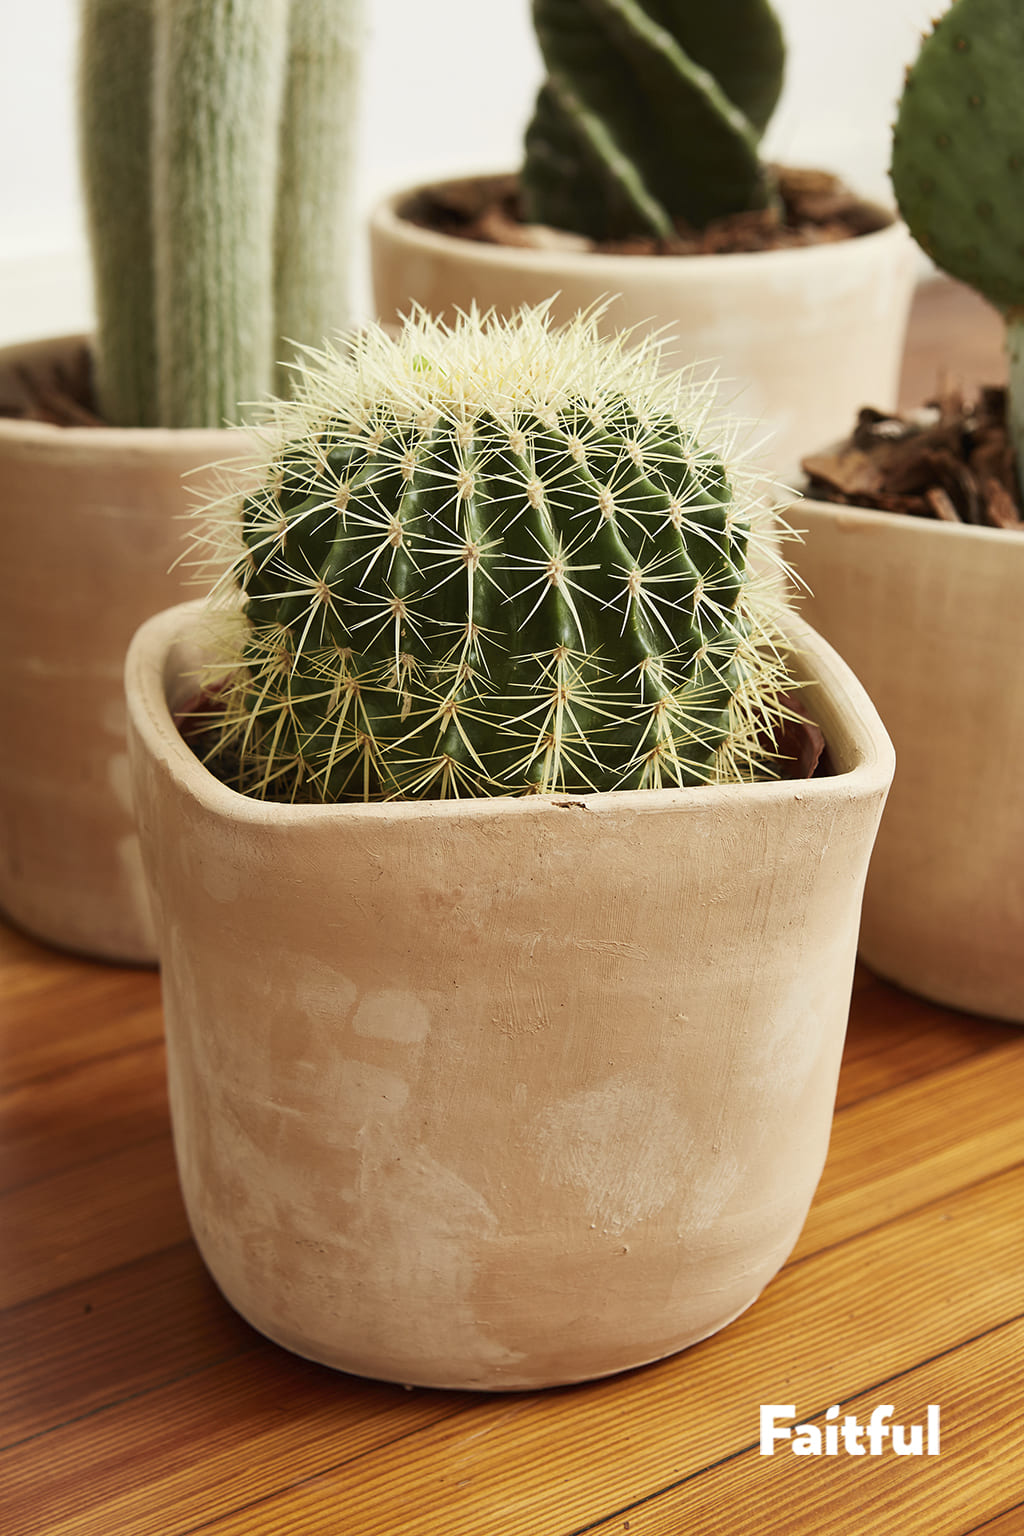 Faitful Viveros Plantas Exterior Cactus Grusonii - Faitful viveros